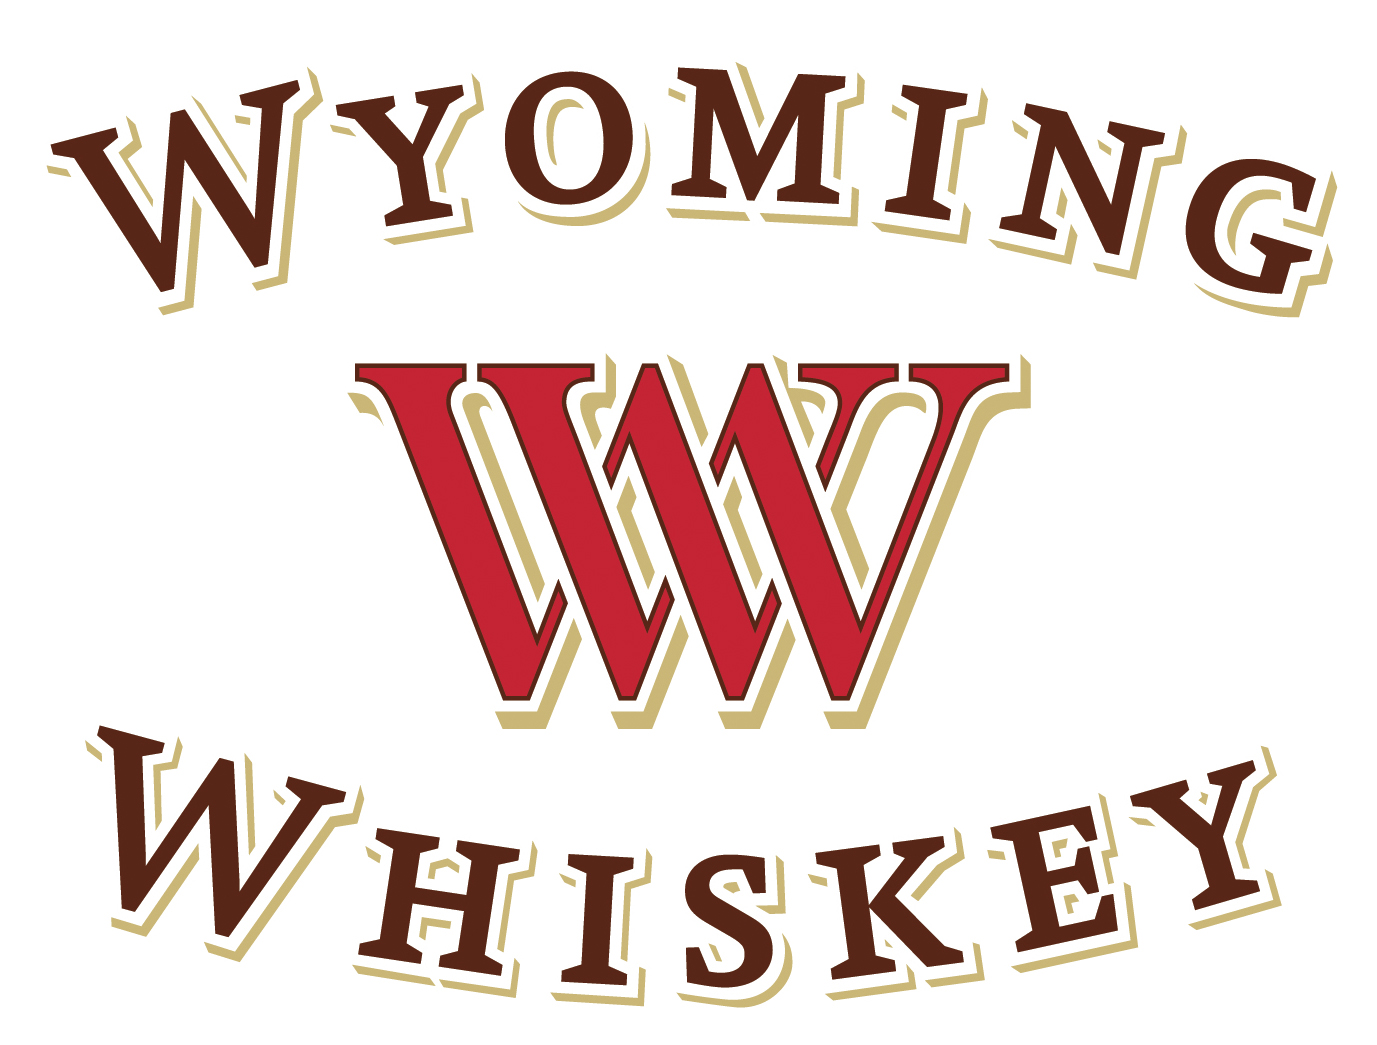 wyoming-whiskey1.jpg